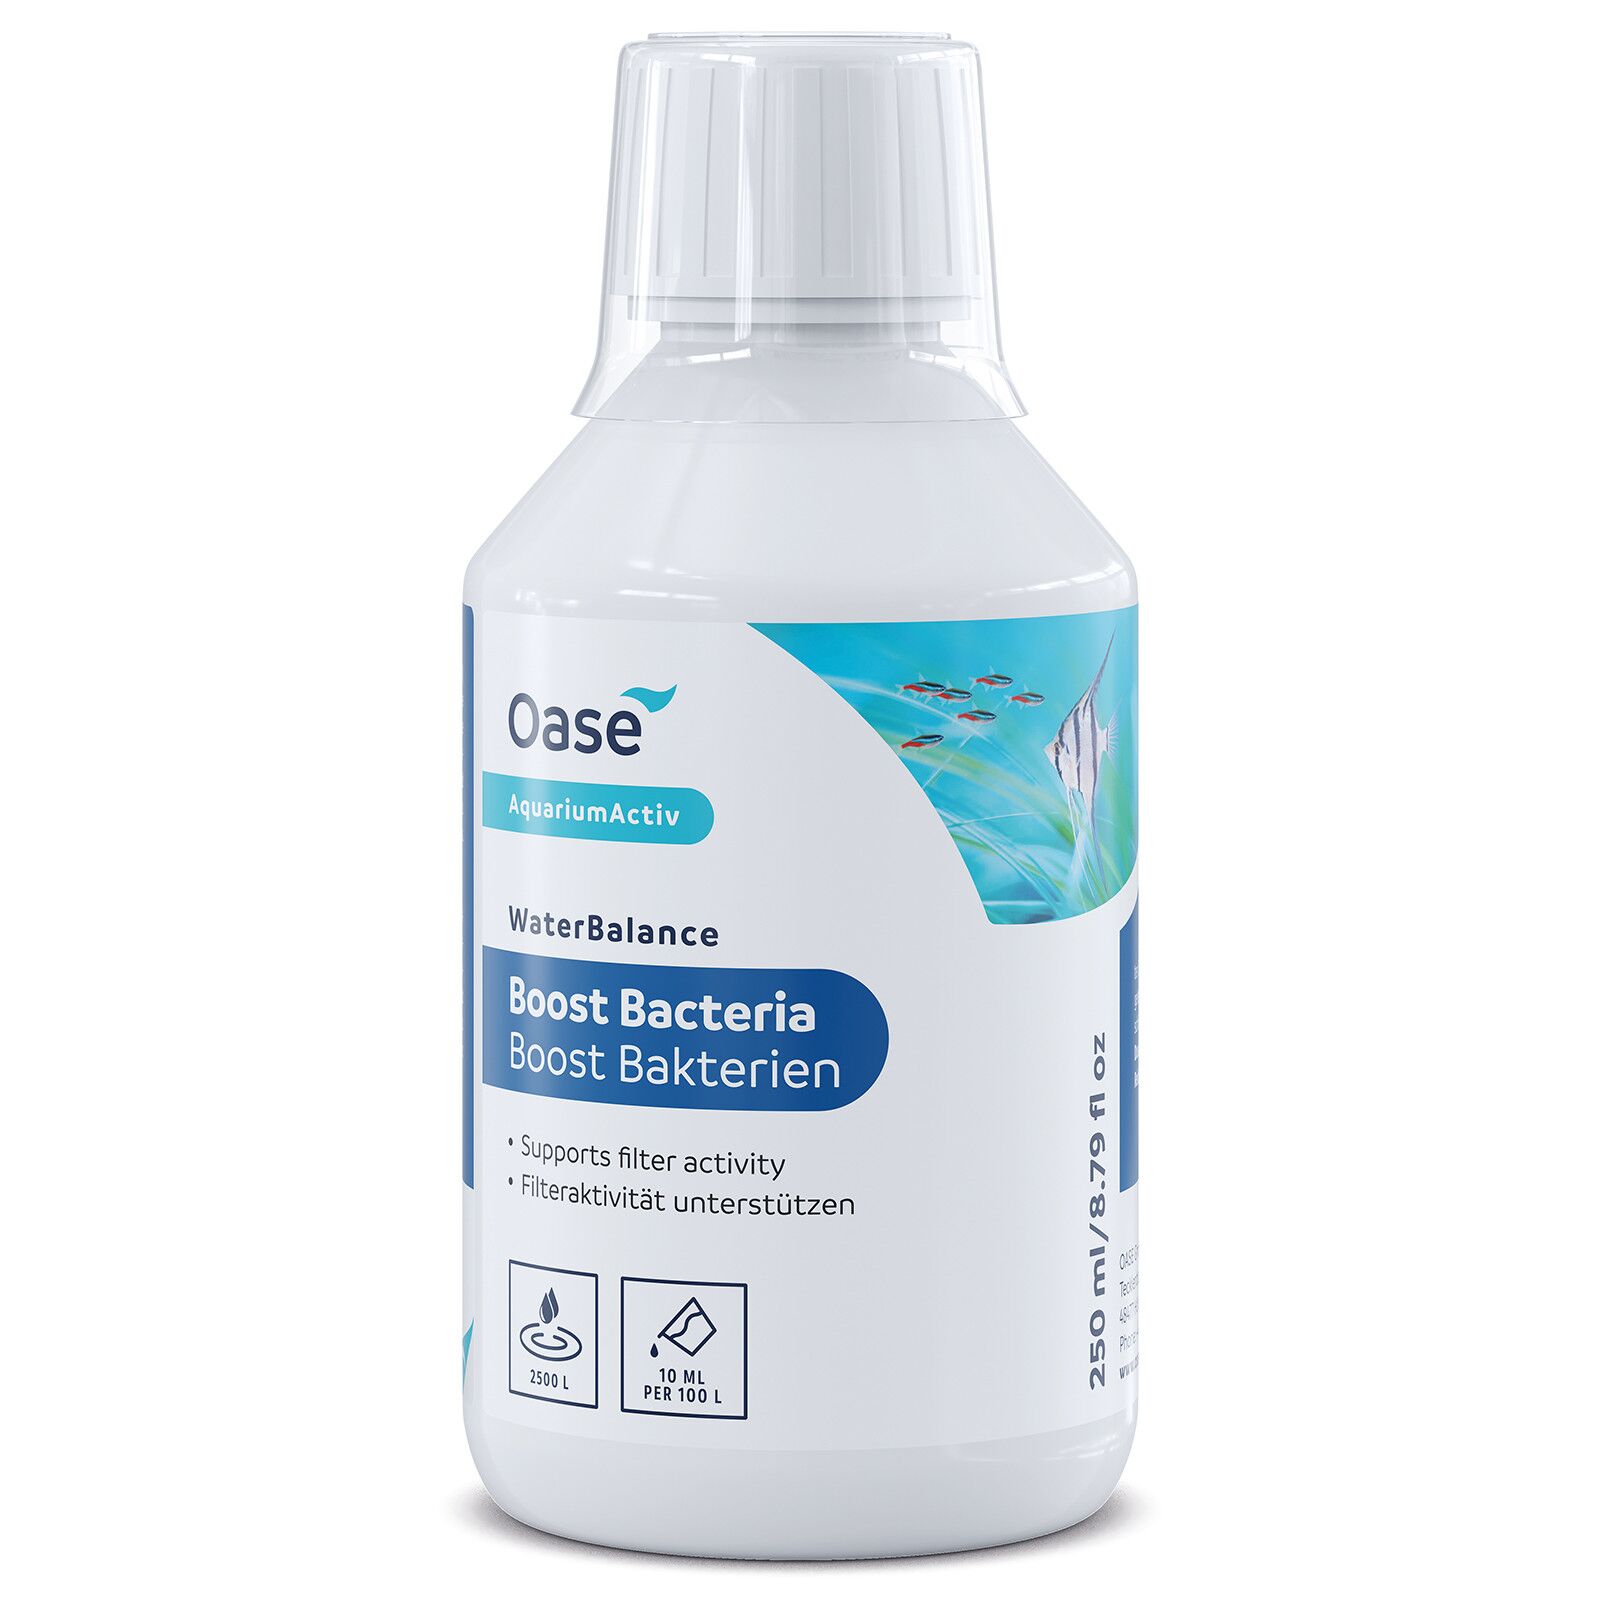 Oase - WaterBalance Boost Bacteria